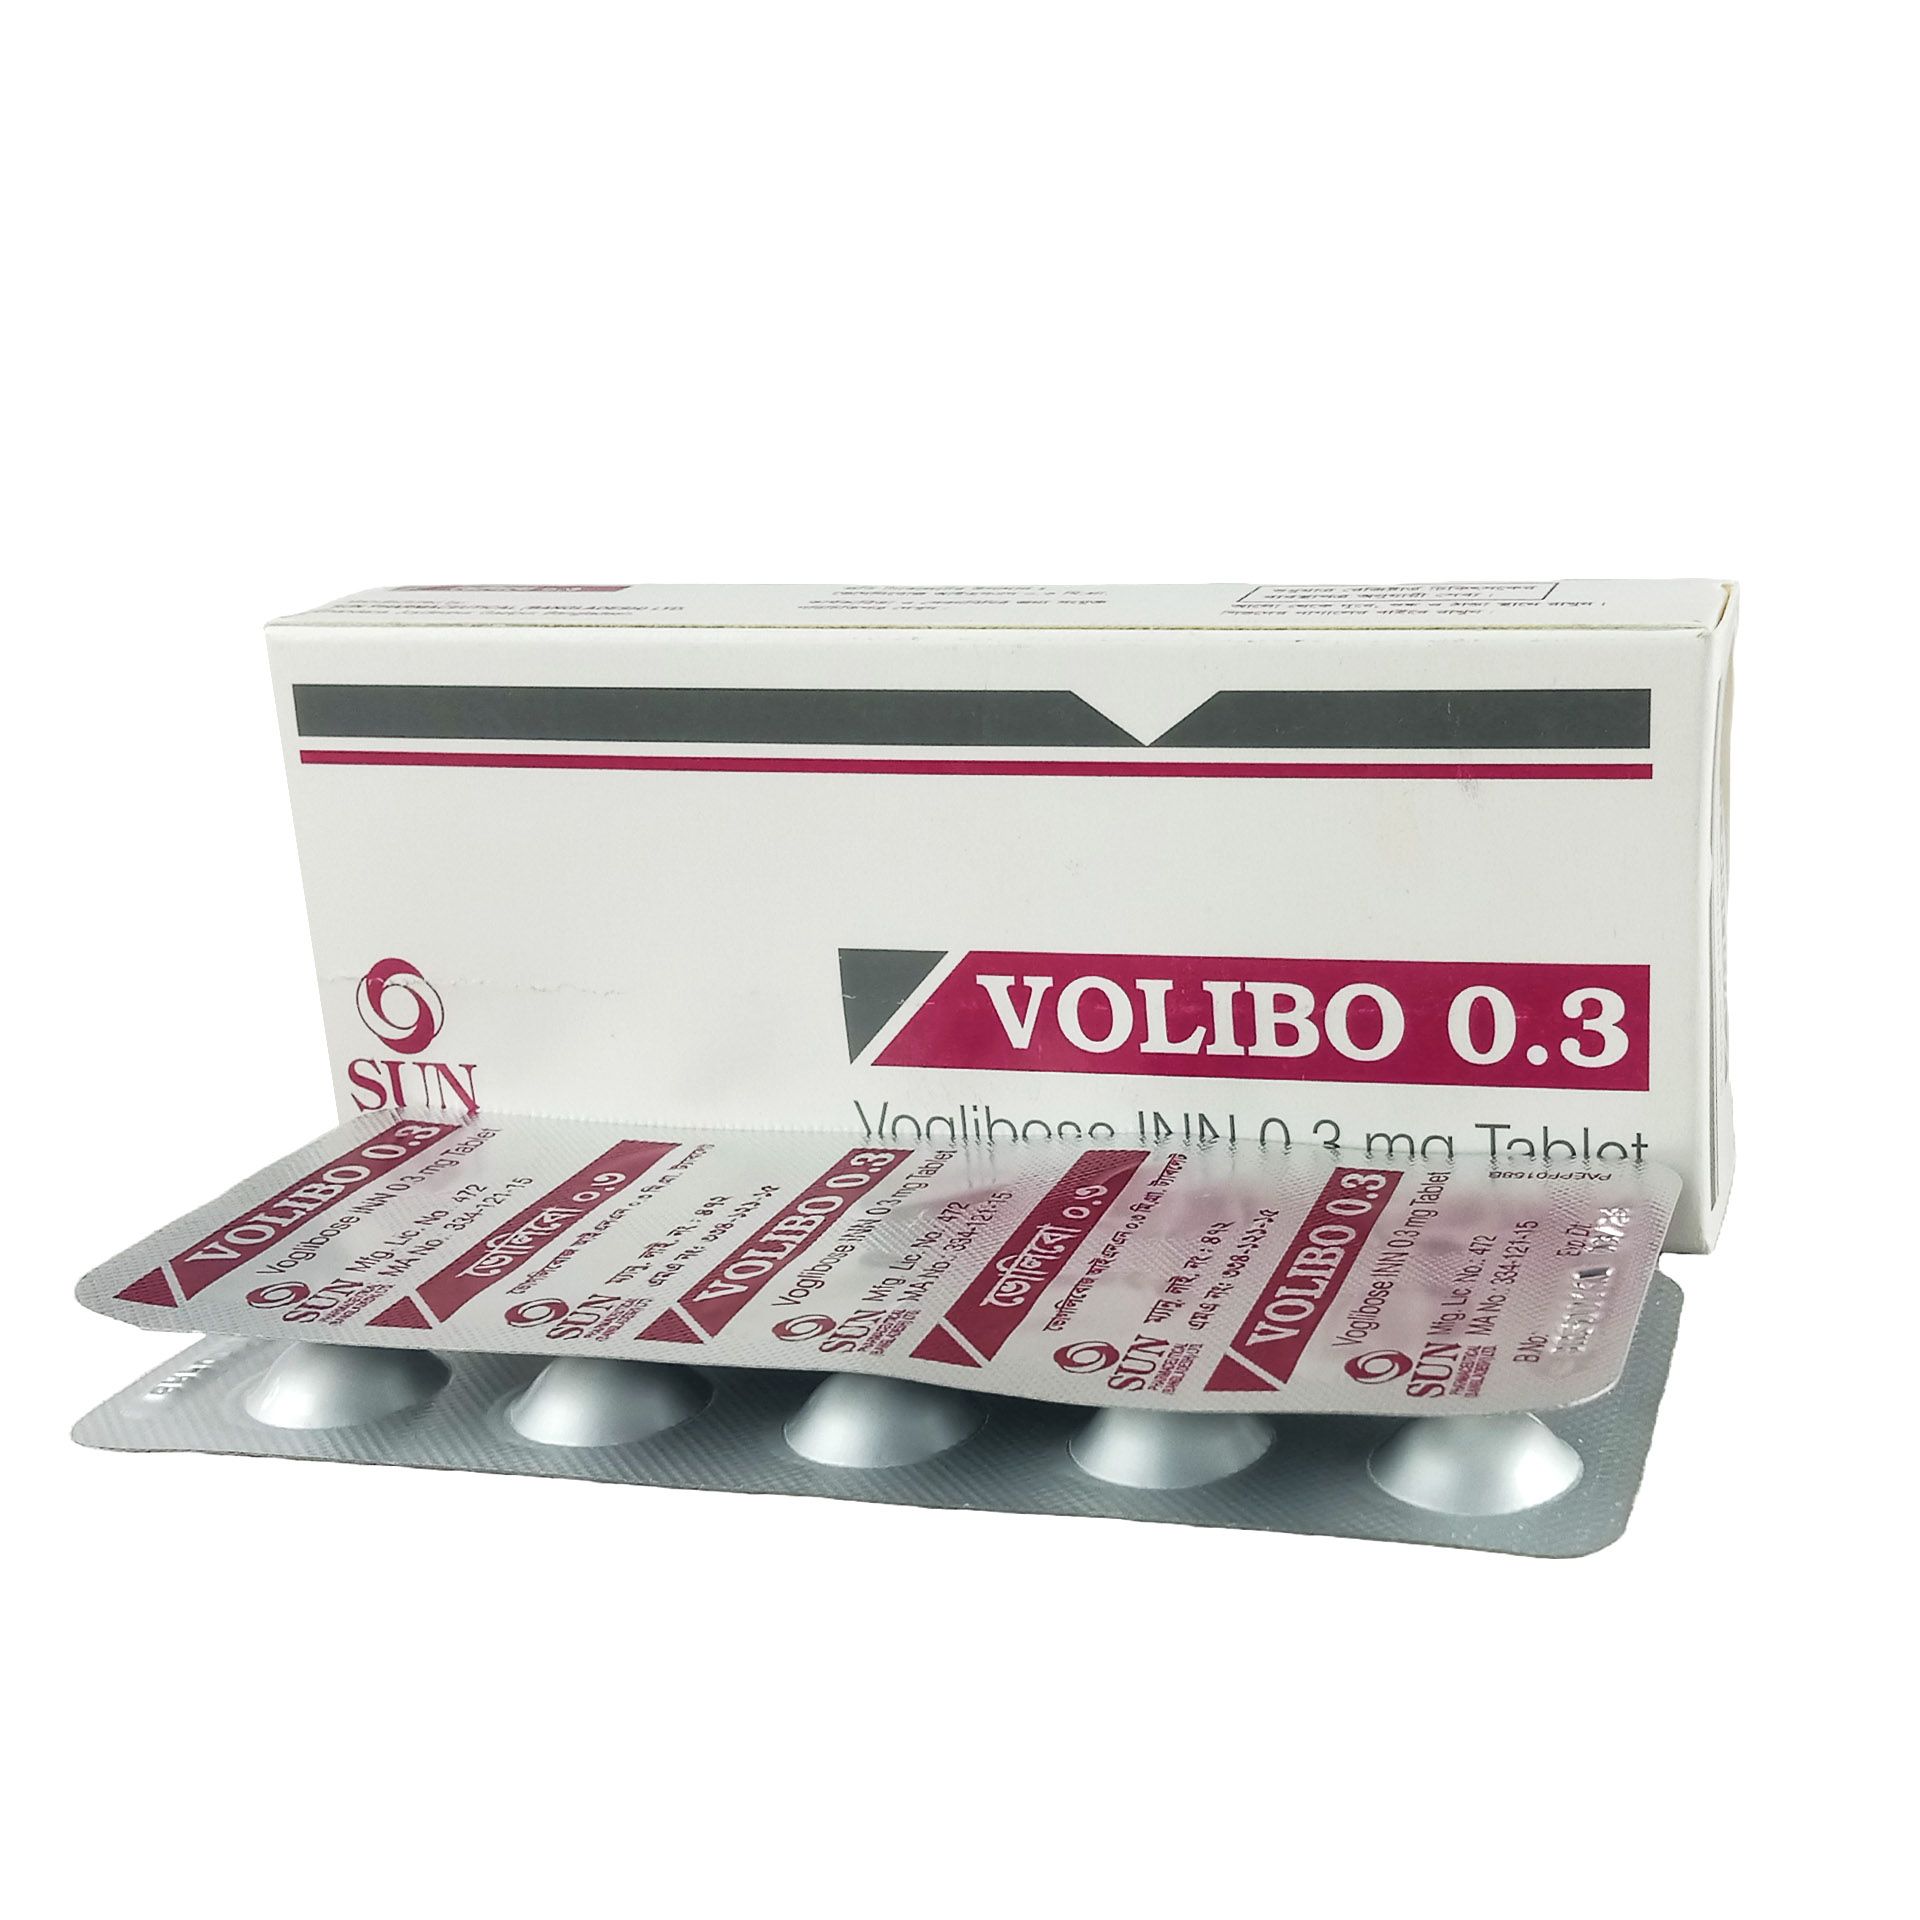 Volibo 0.3 300mcg Tablet